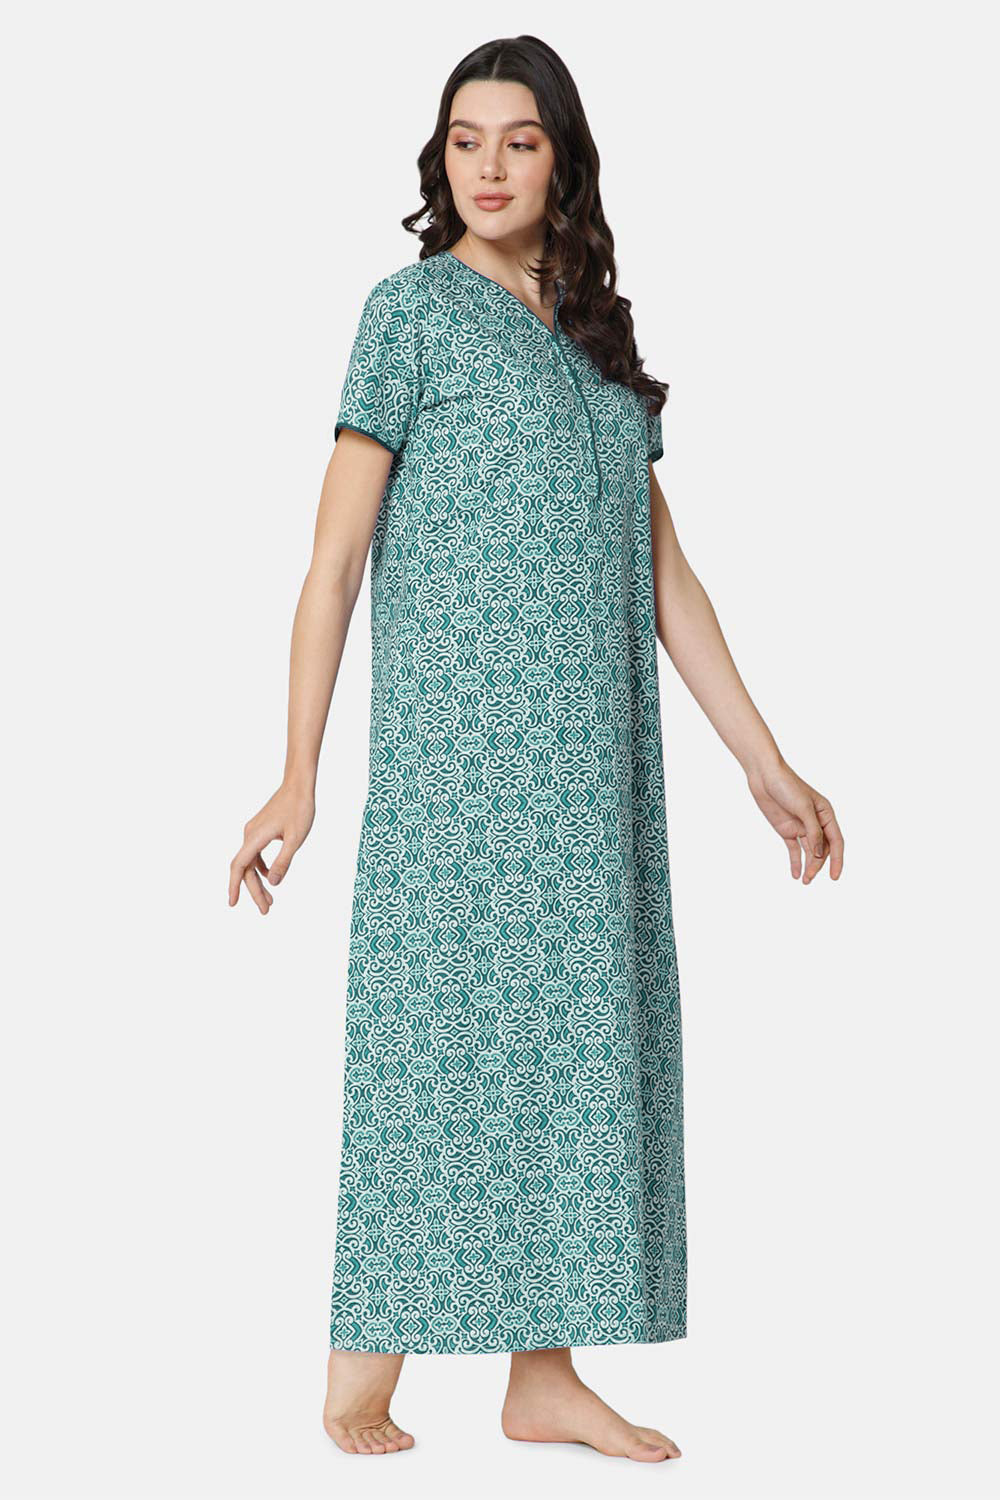 Naidu Hall A-line Front Open Women's Nighty Full Length Half Sleeve  - Green - R119